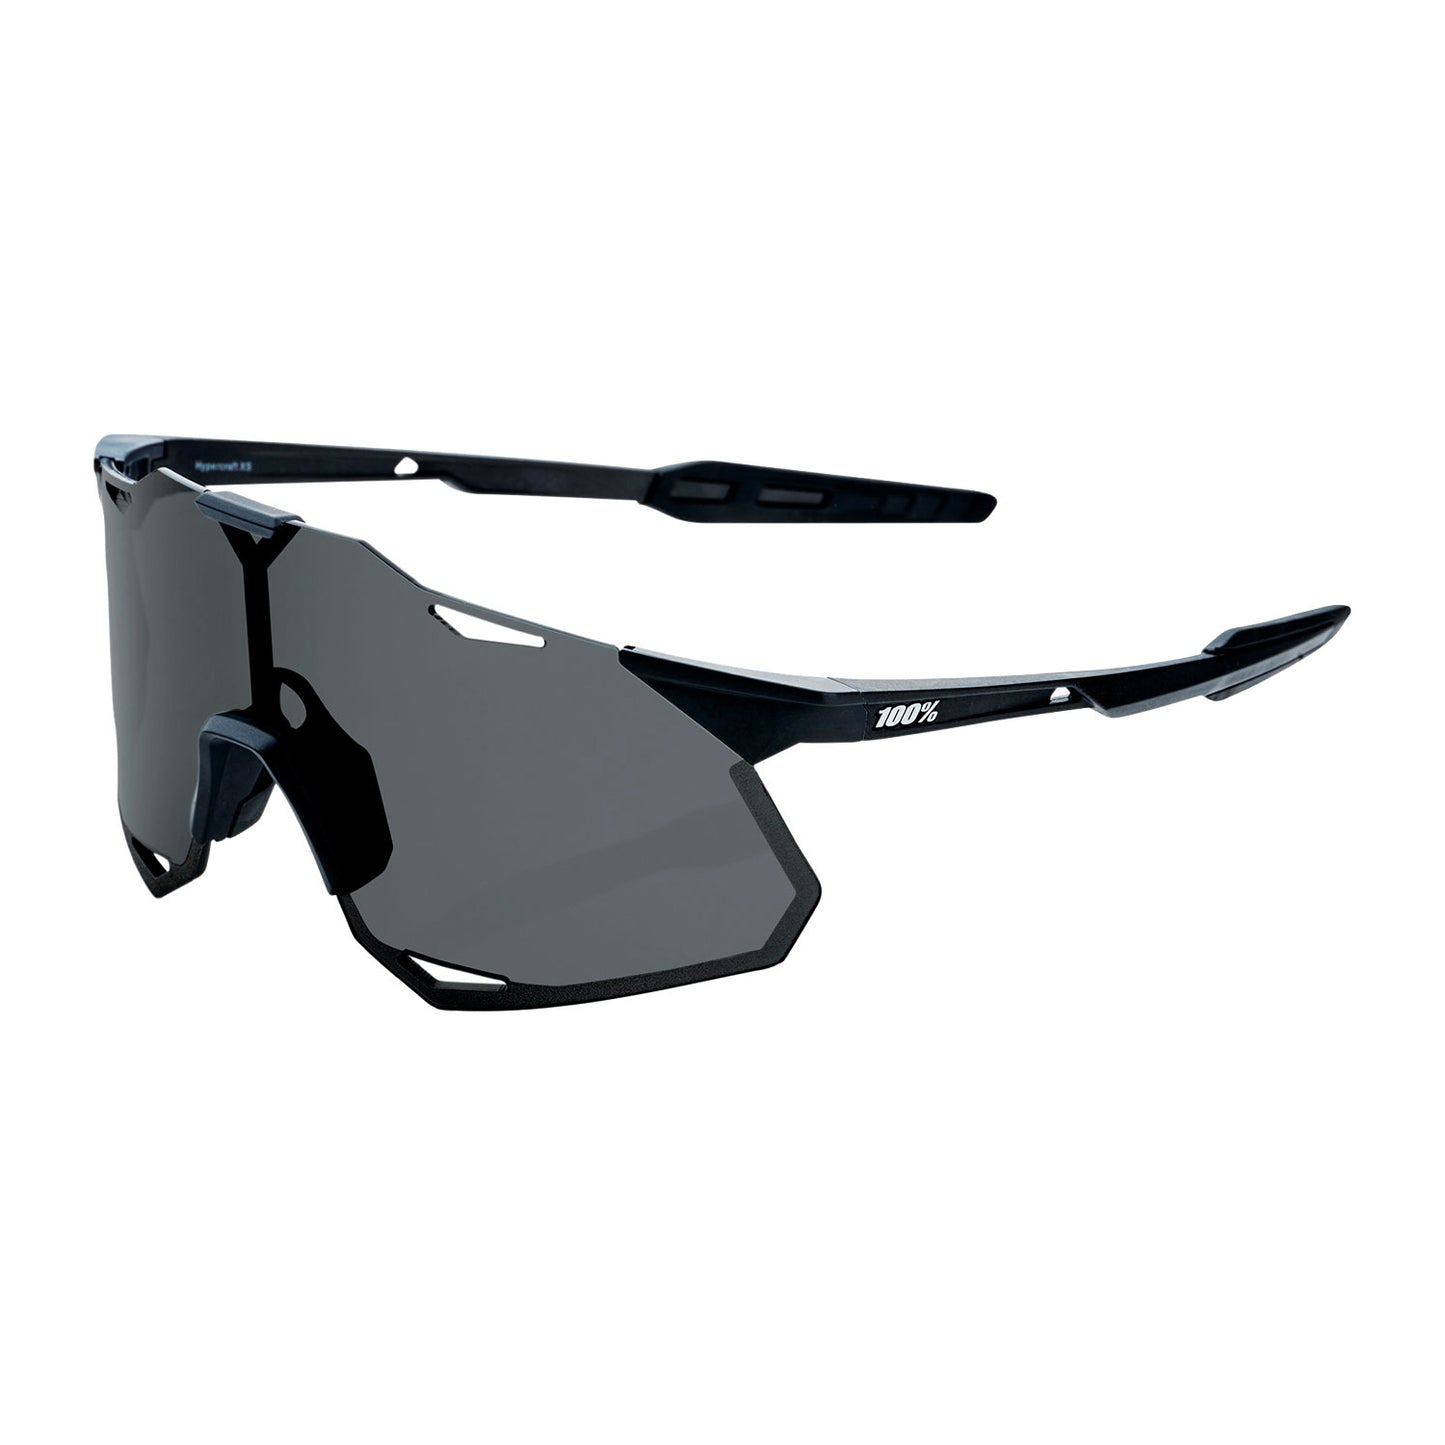 100 Percent Hypercraft XS Sunglasses - Matte Black - Smoke Lens